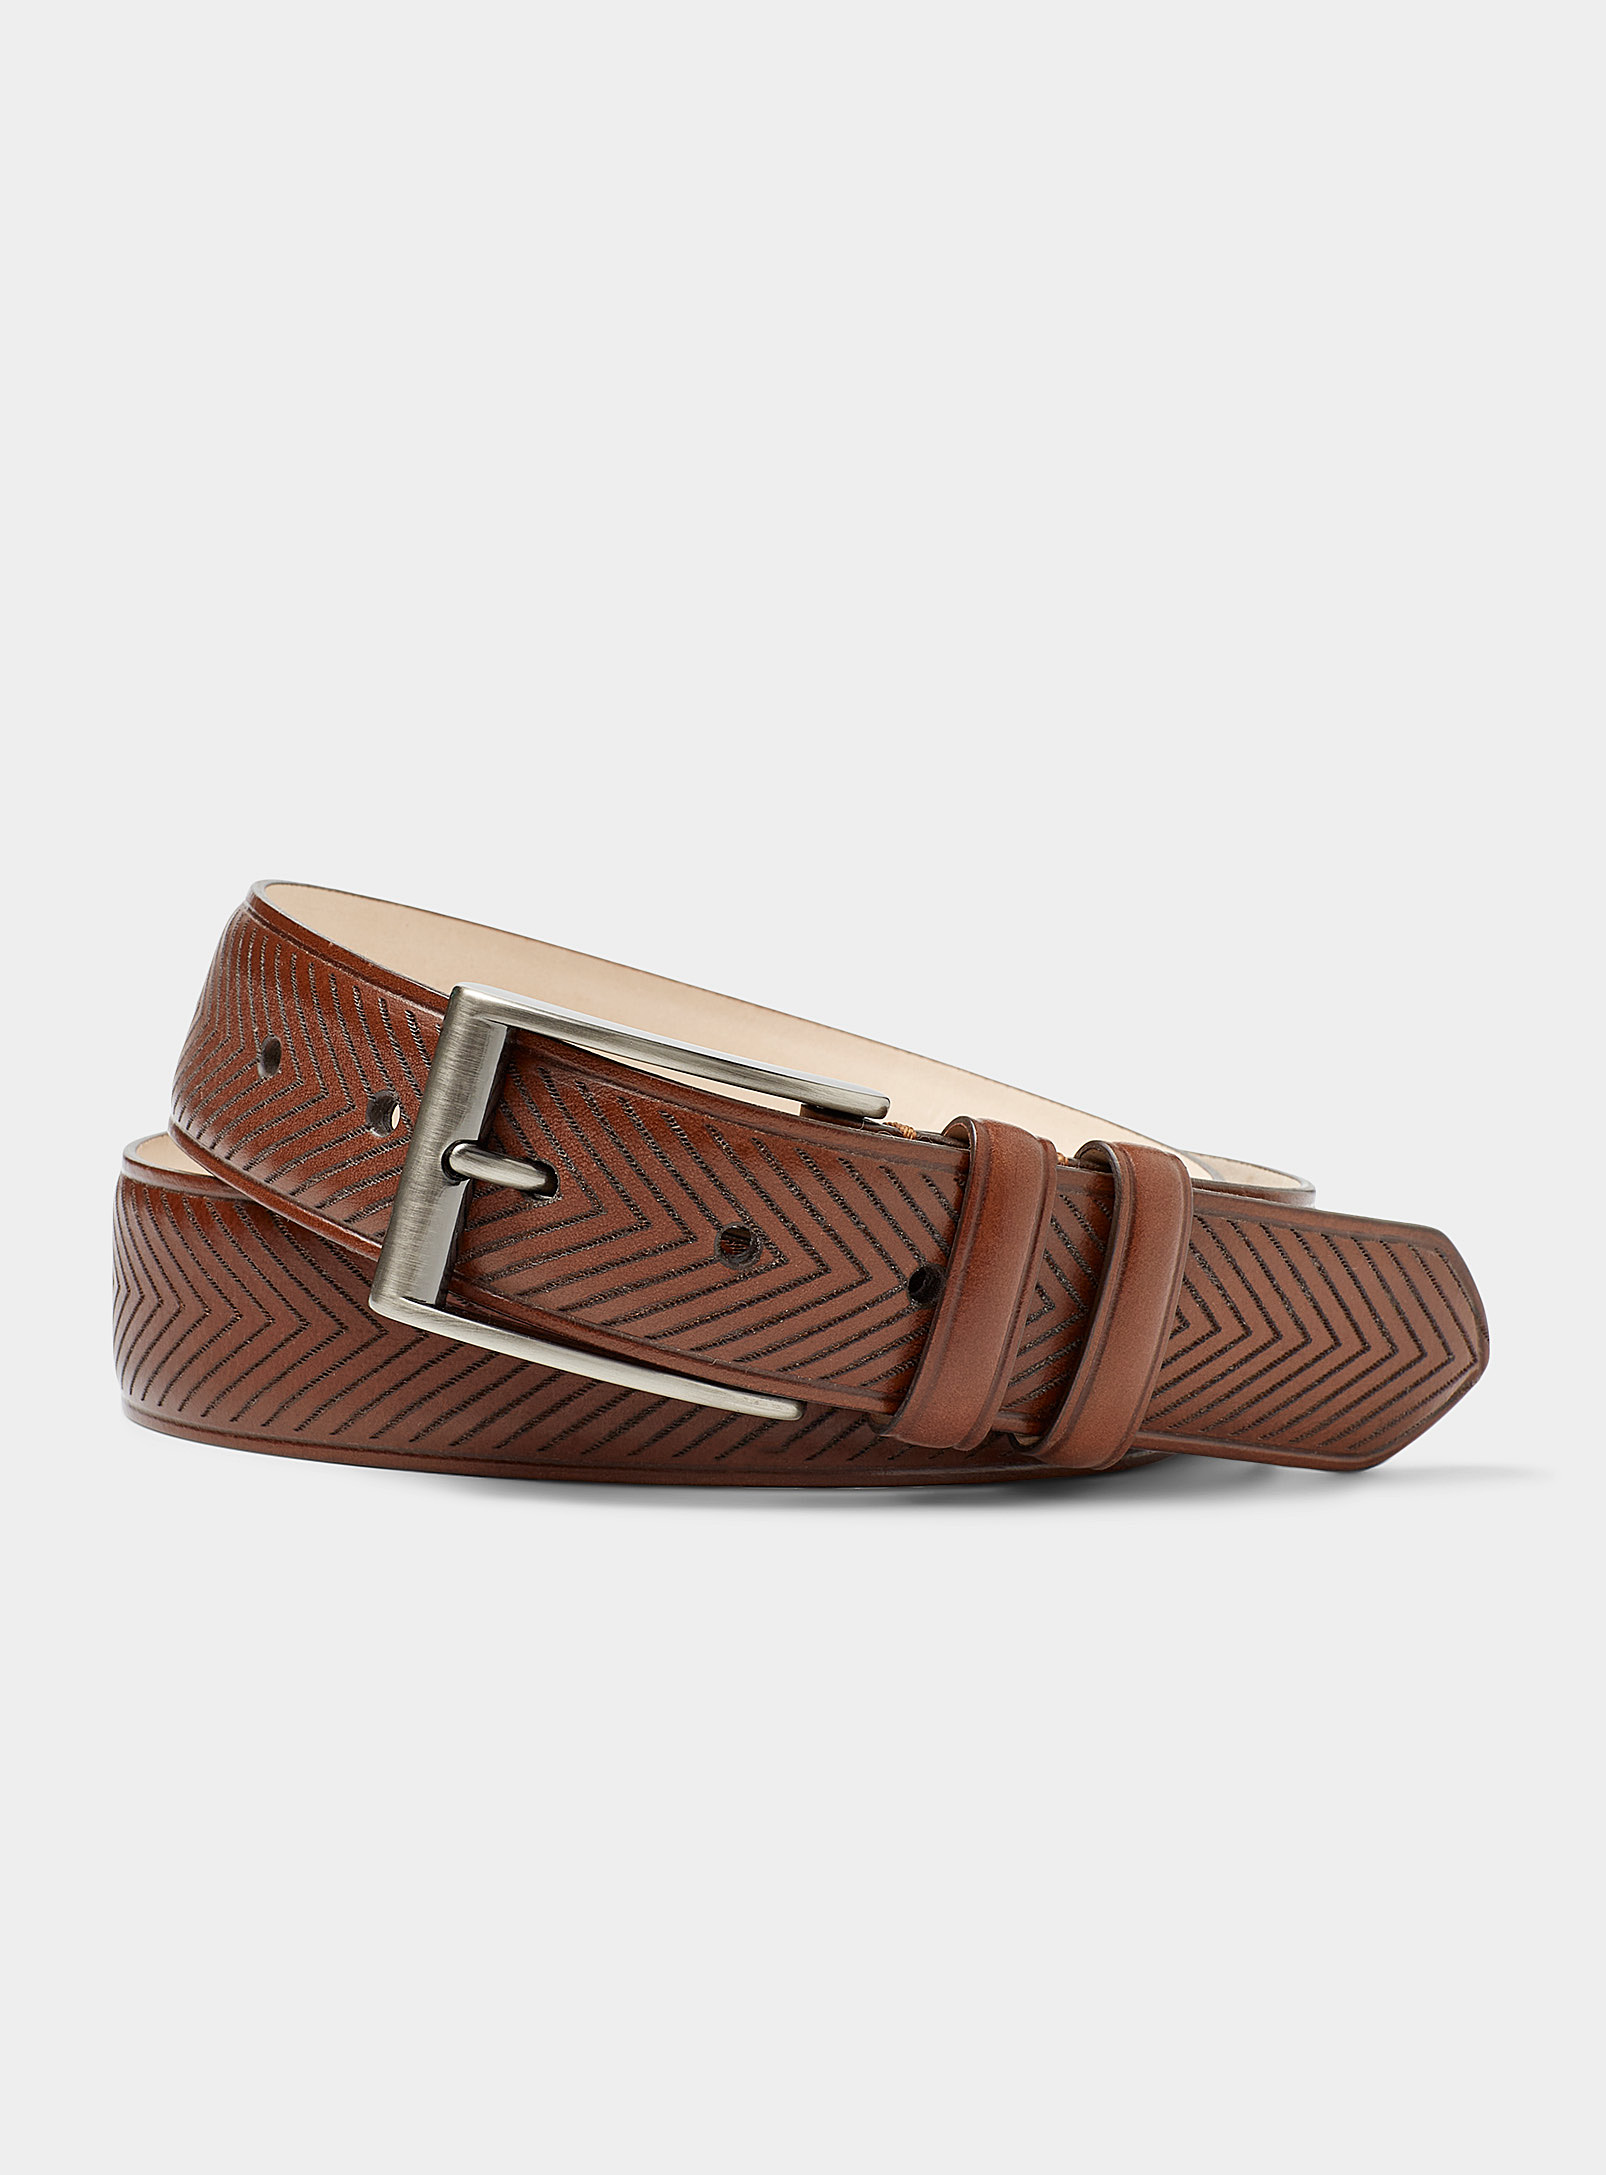 Le 31 - La ceinture cuir brun chevrons